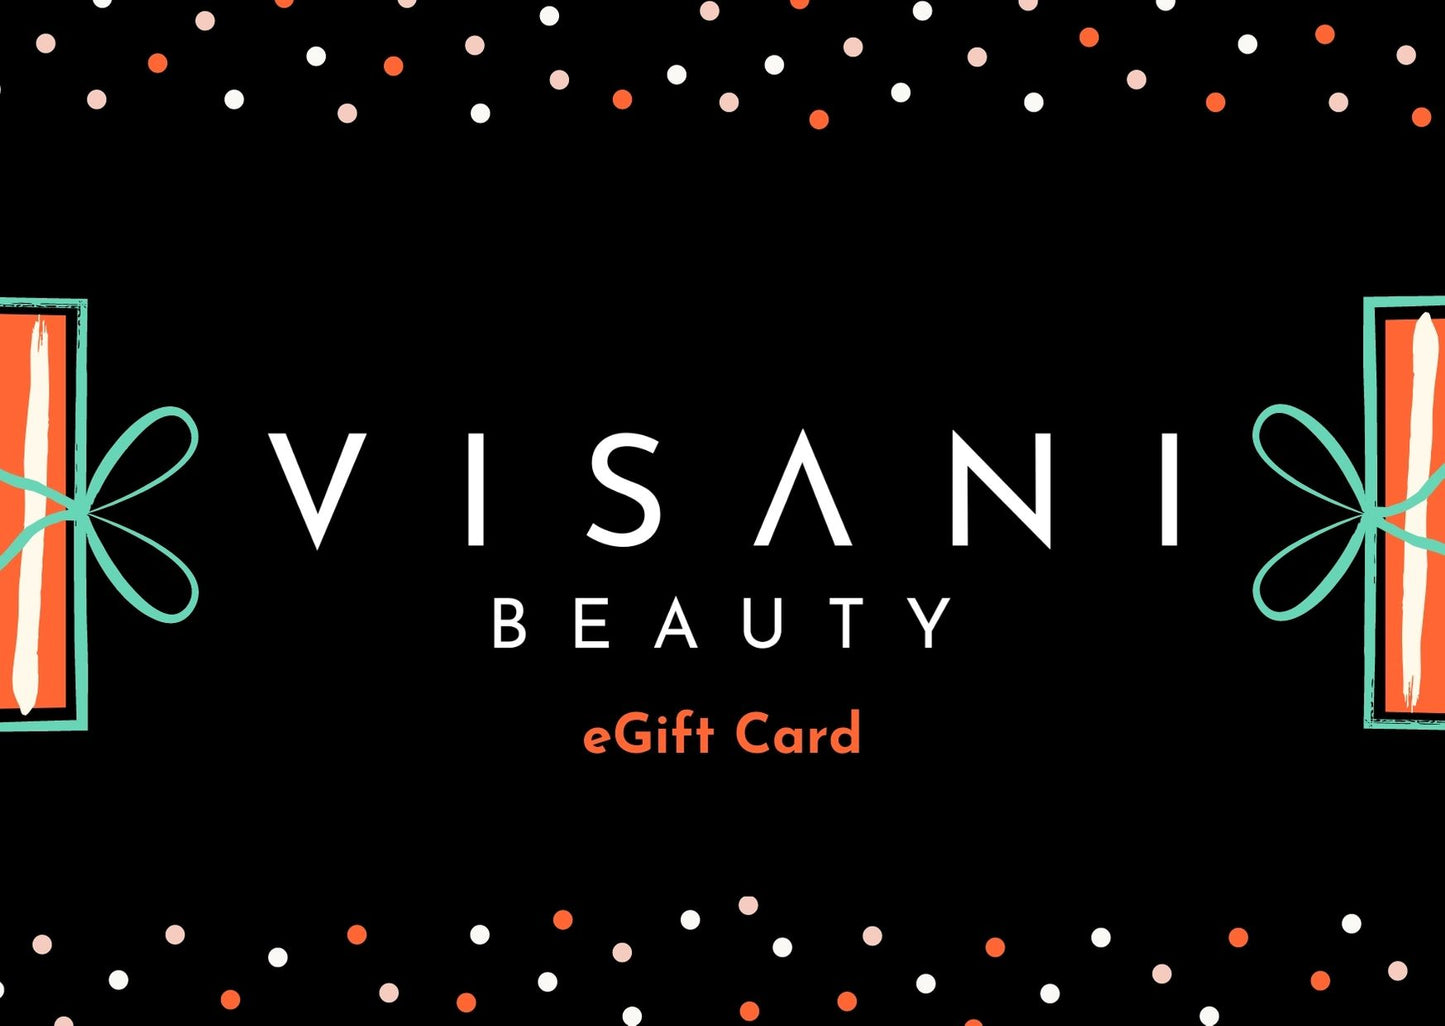 Visani Beauty eGift Card